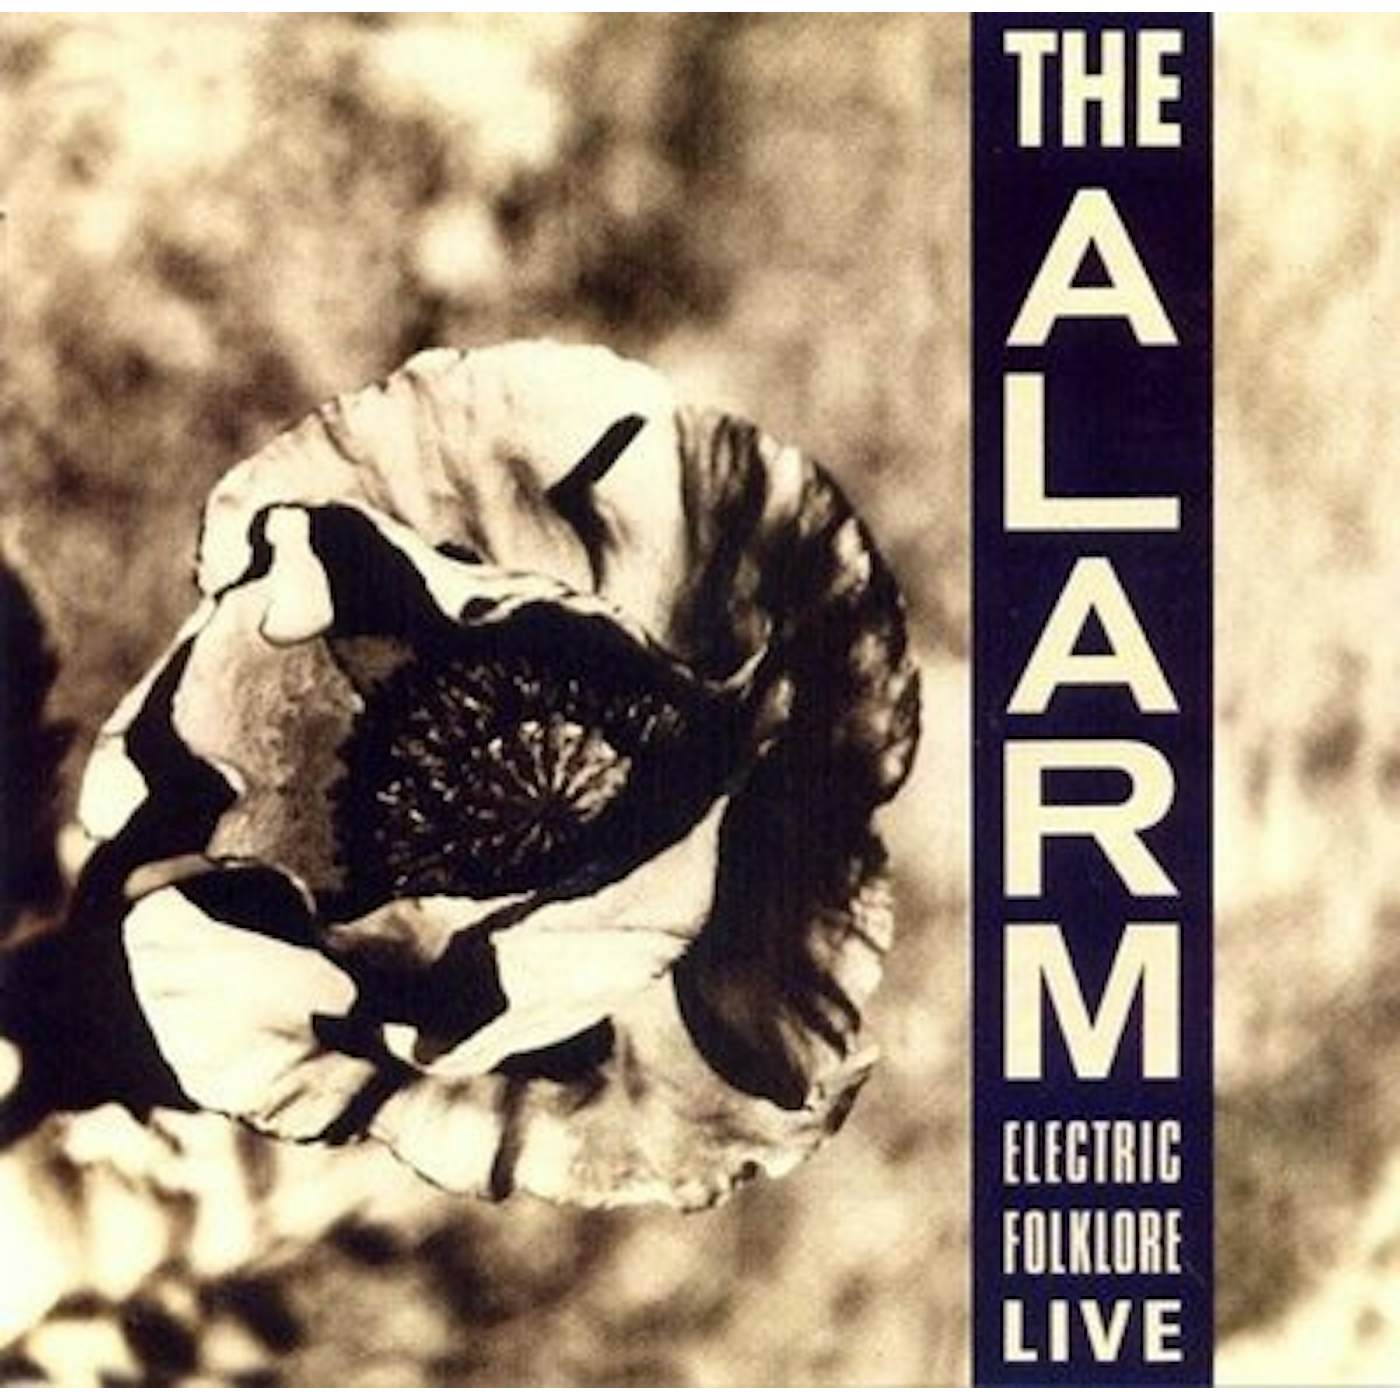 Alarm Electric Folklore Live Vinyl Record